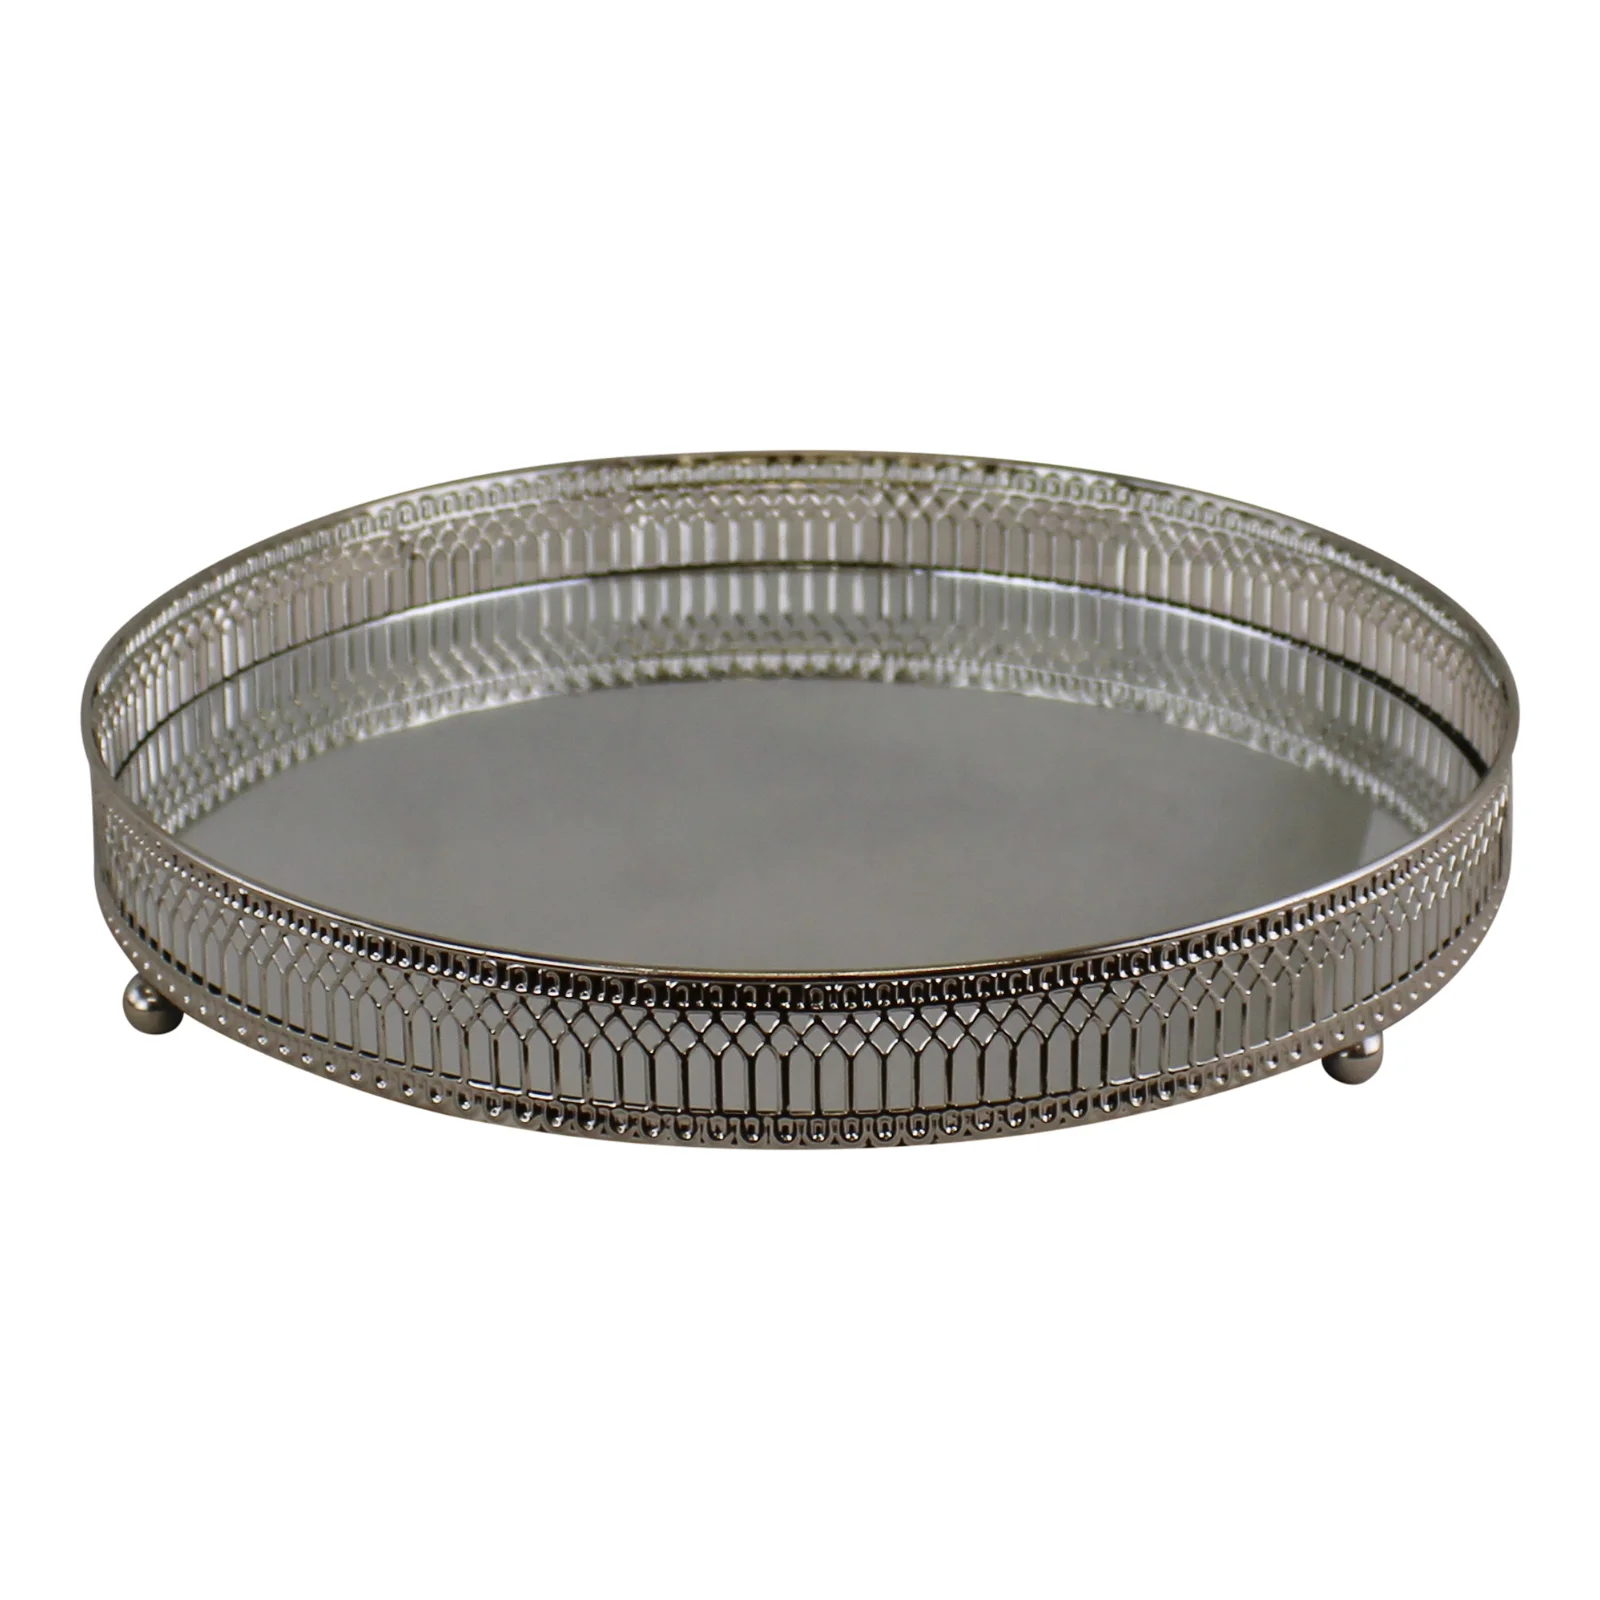 Silver Tray round tray 28cm